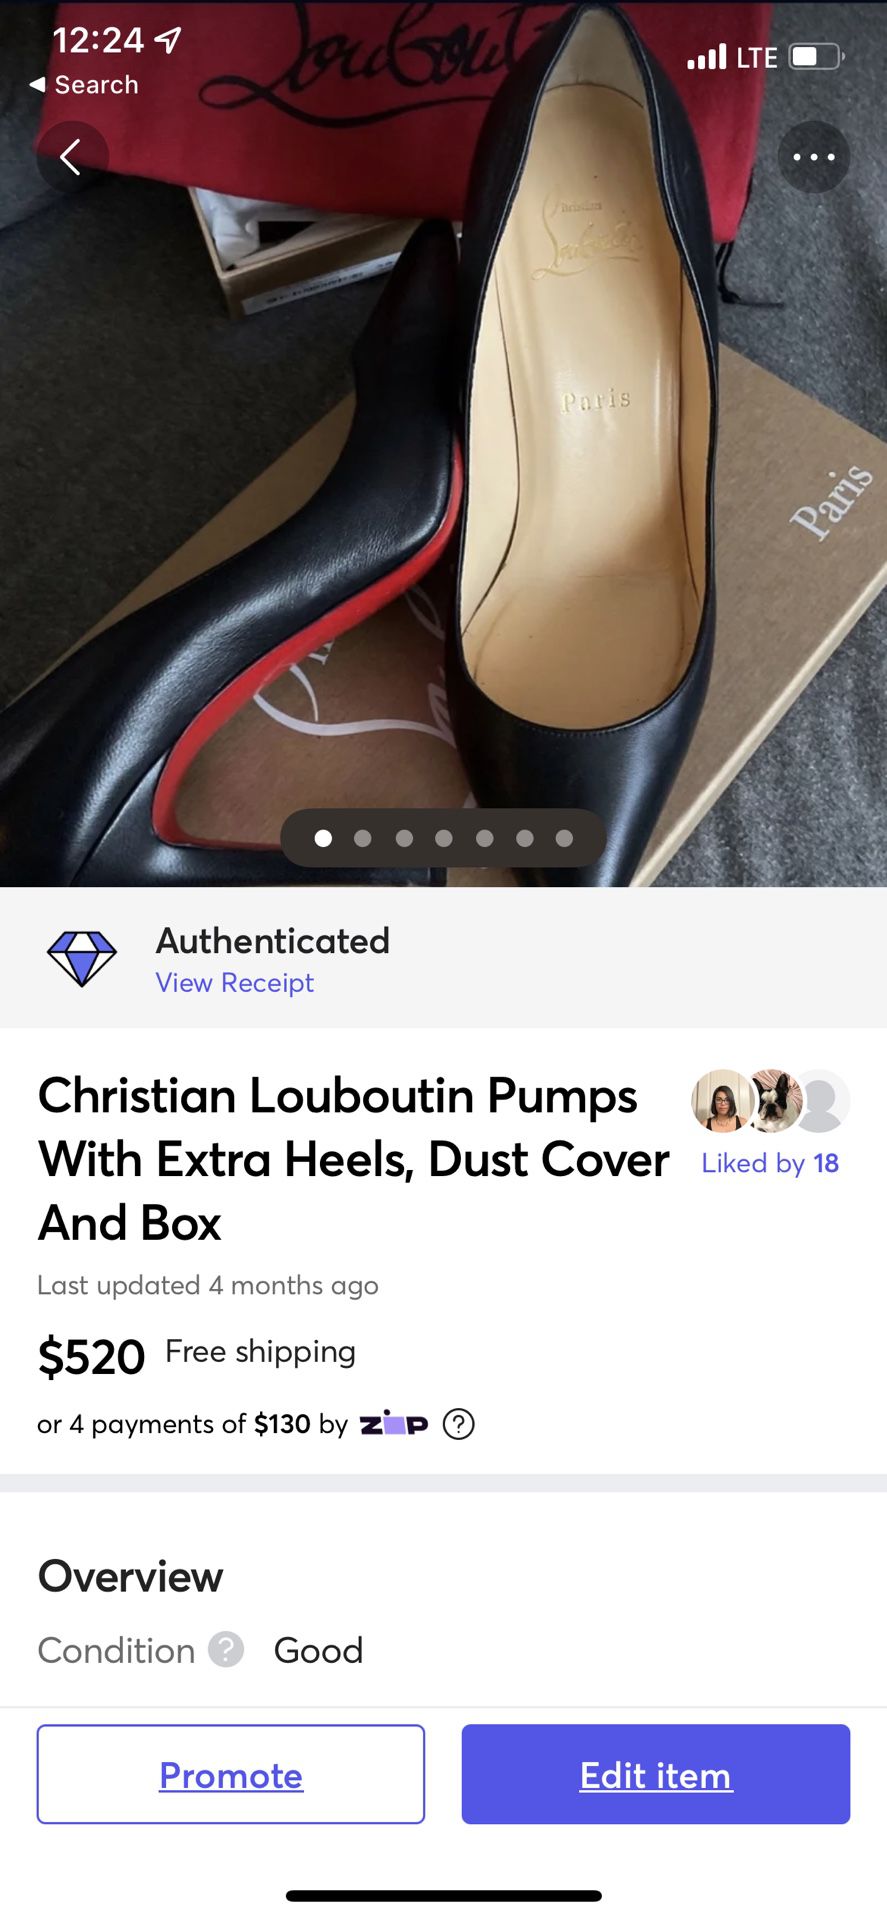 Christian Louboutin Pumps